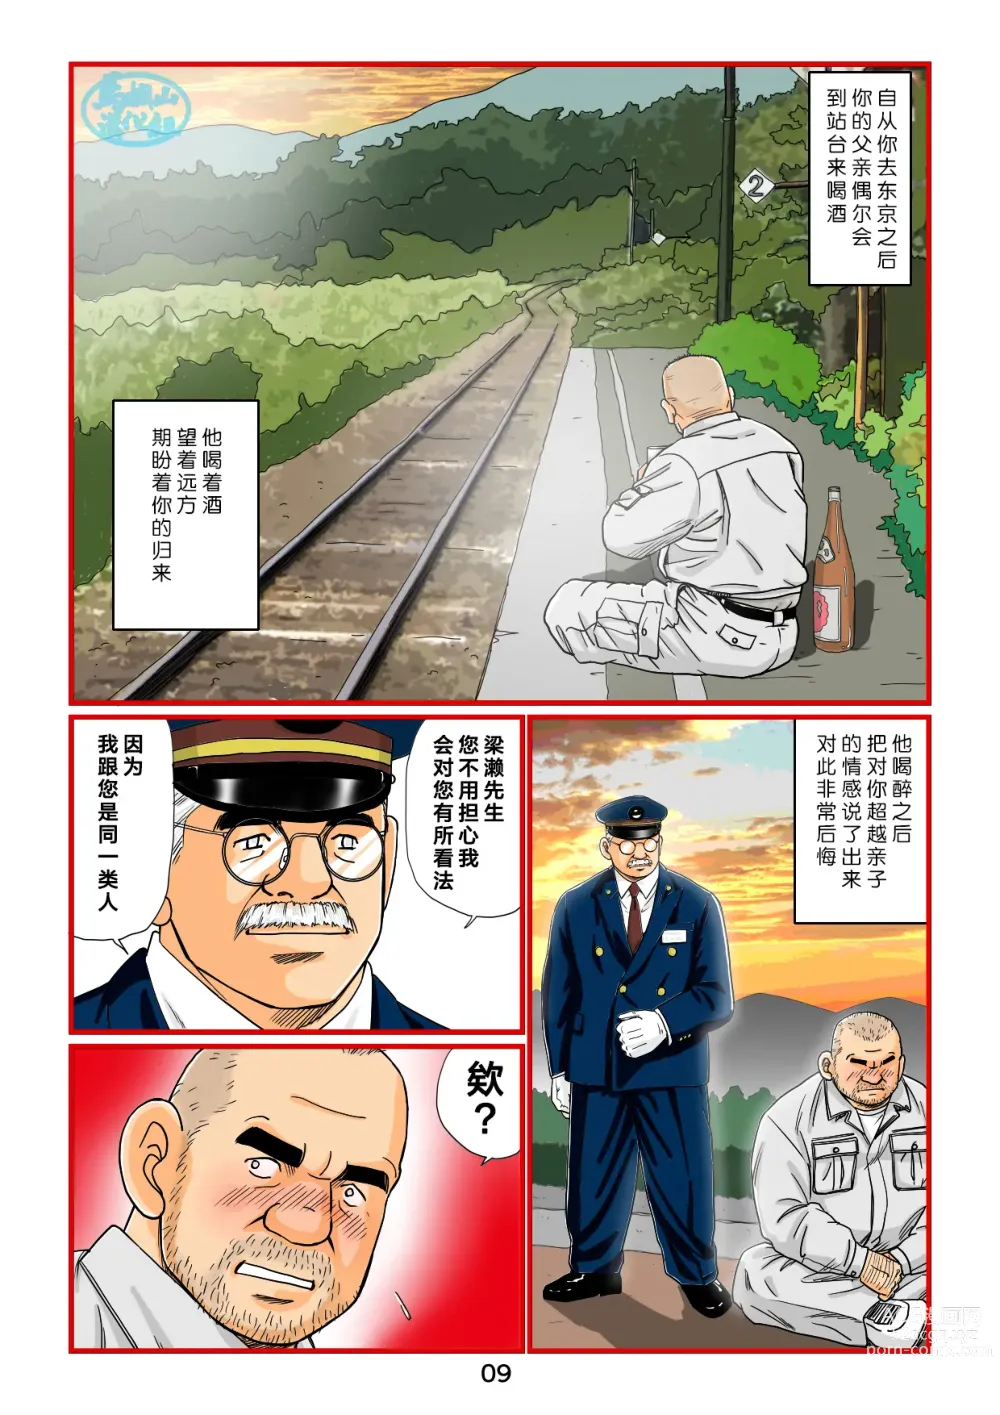 Page 9 of manga 「铁道员的浪漫」 第三回 站长与铁道员之夜